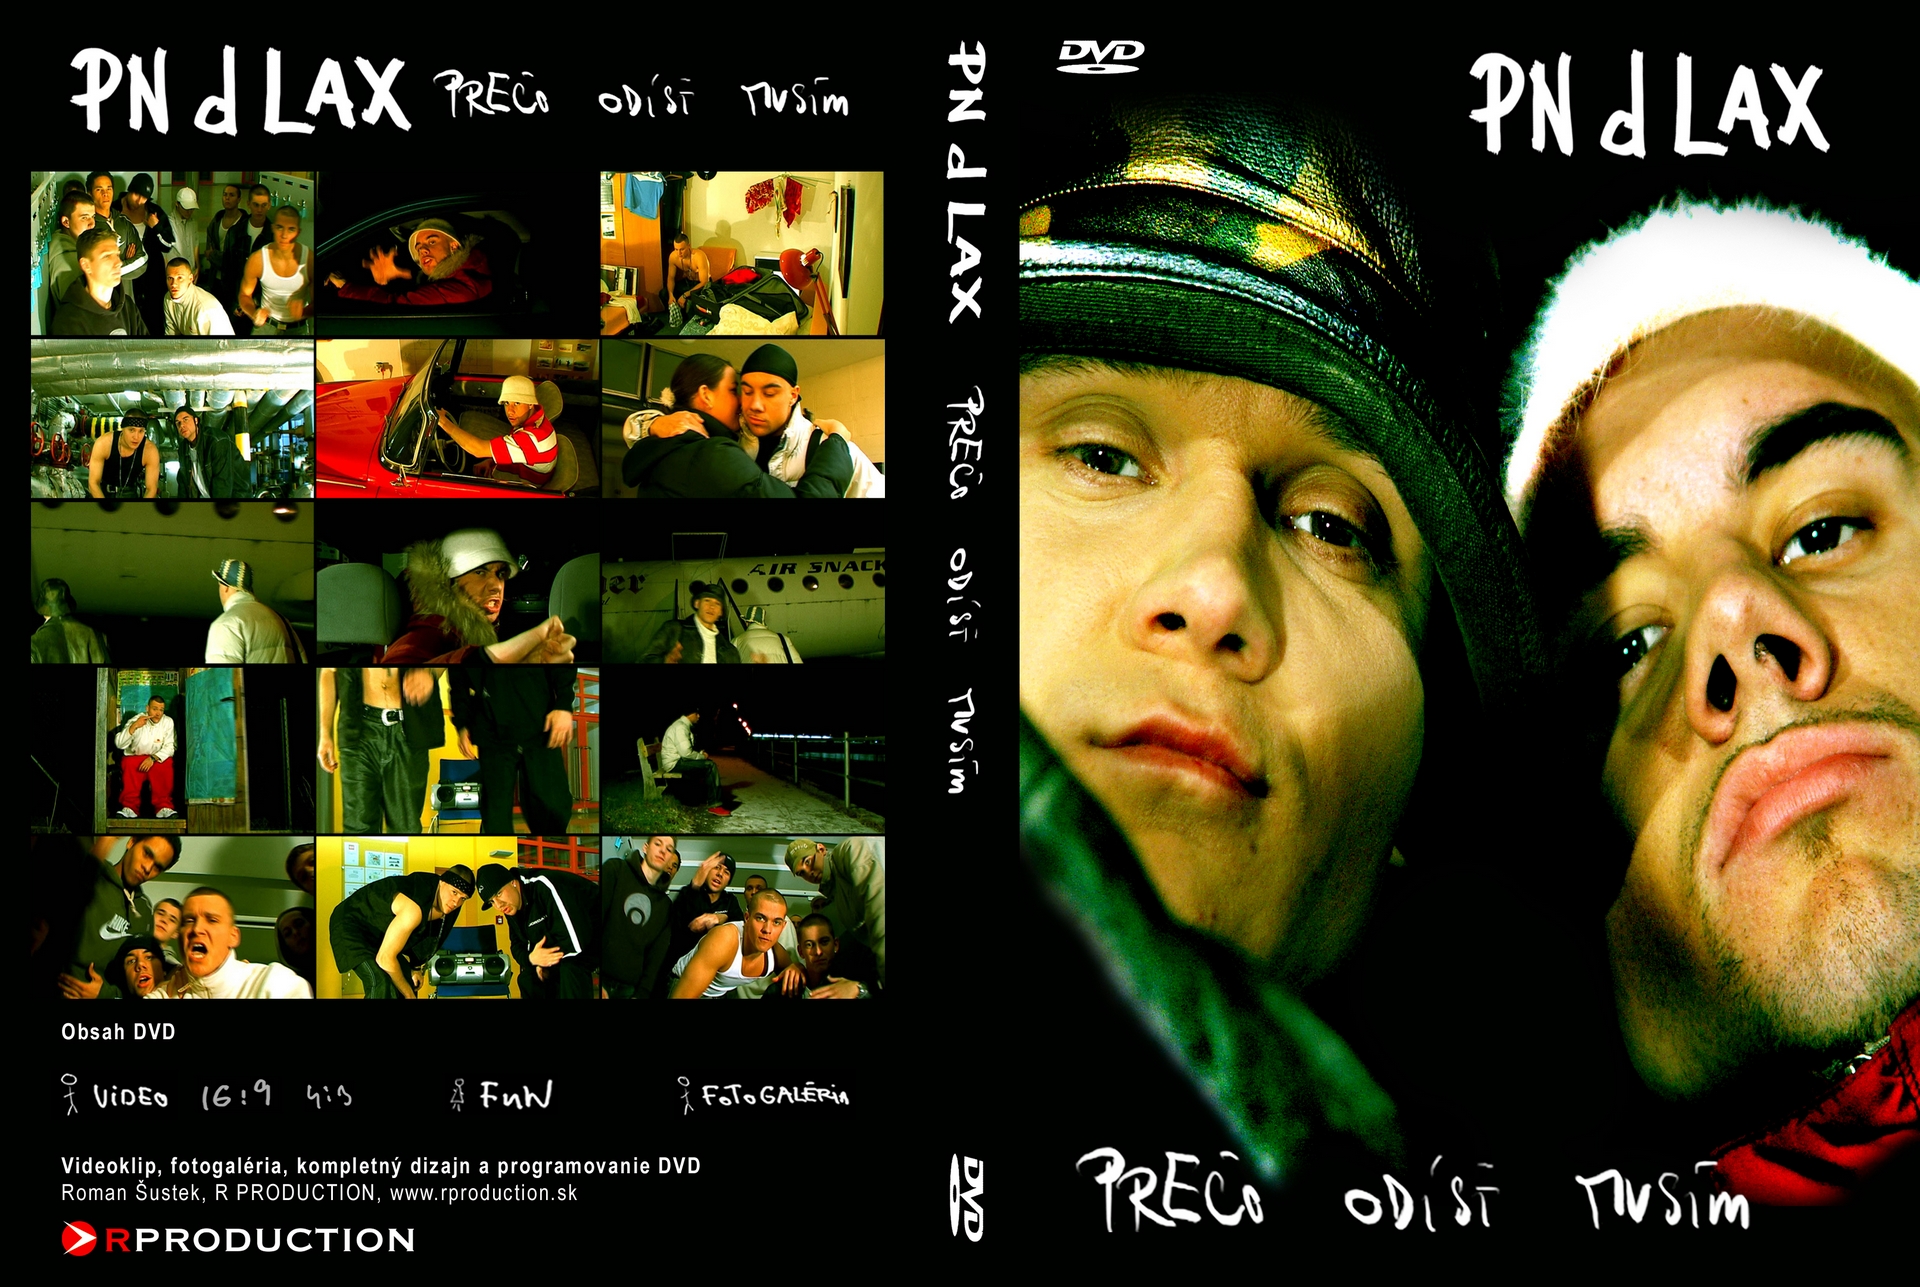 art_history_2004_pn_d_lax_preco_odist_musim_music_video_cover_dvd